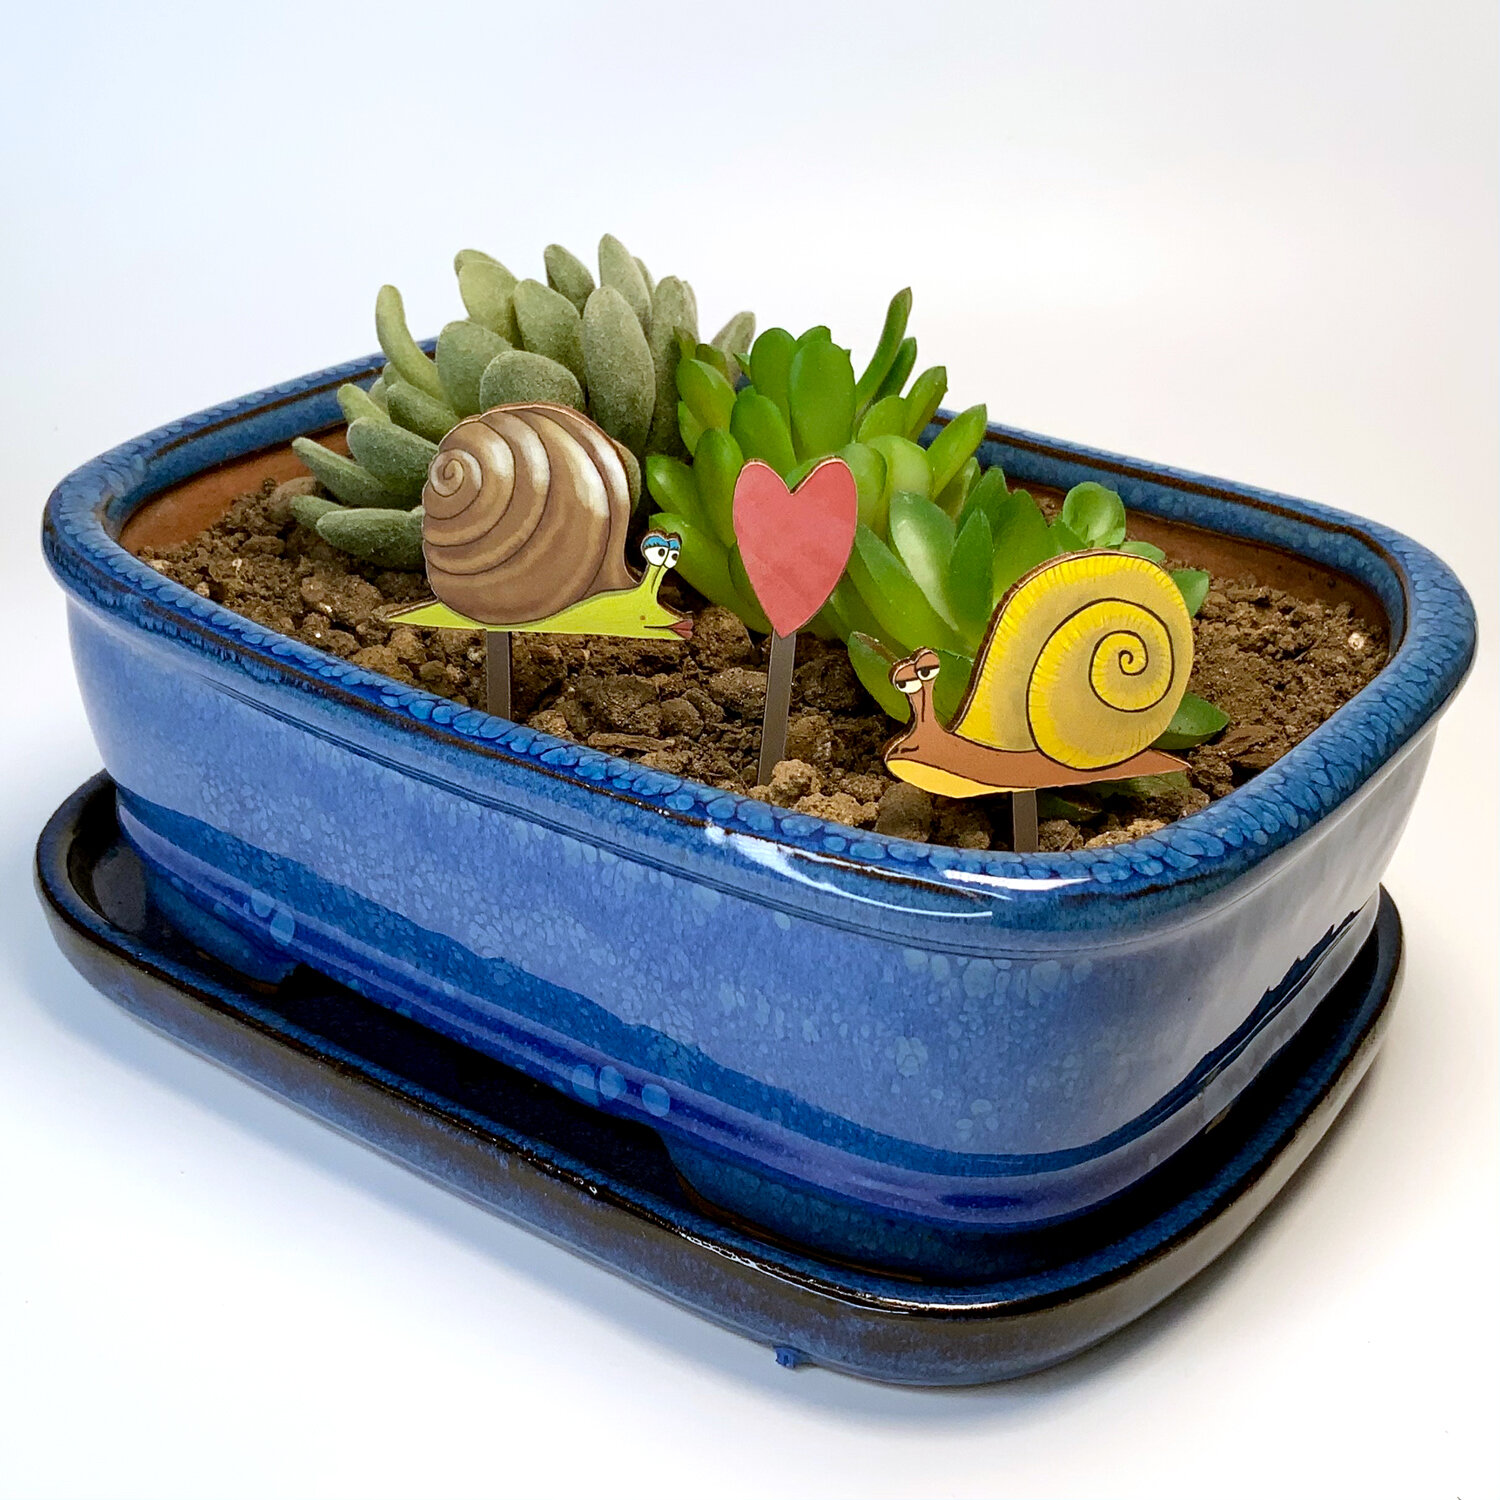 Snail Love Fancy Plants Diorama Kit — 20 LEAGUES